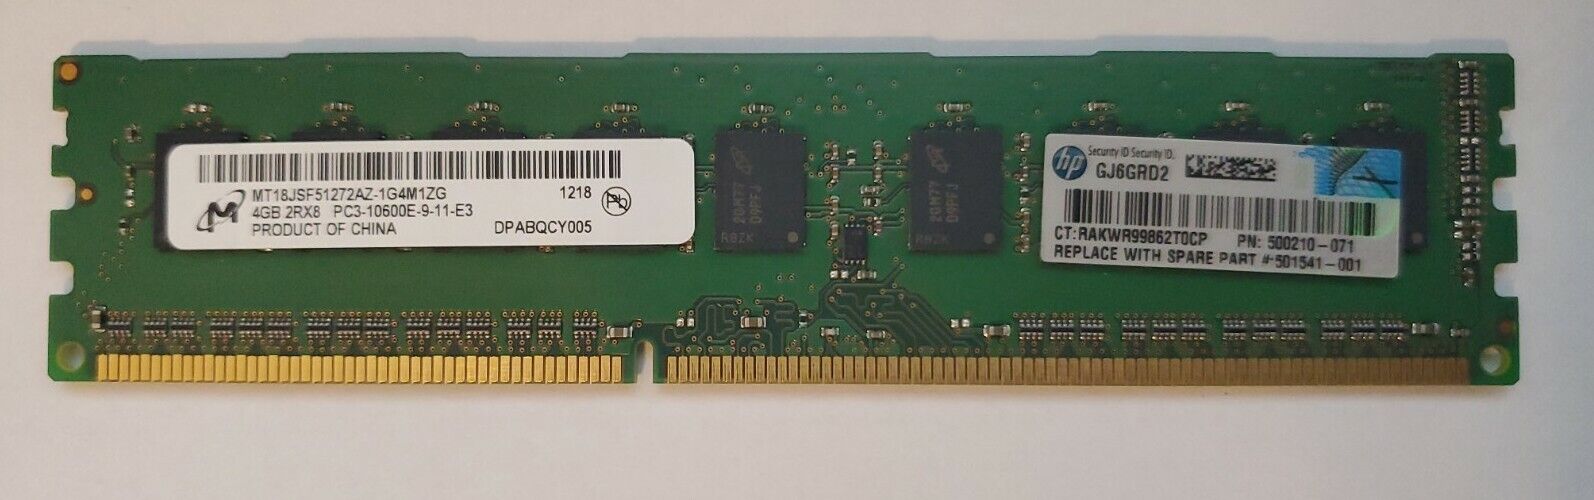 Micron 4GB 2Rx8 PC3-10600E (HP P/N 500210-071) Server Memory RAM REG ECC